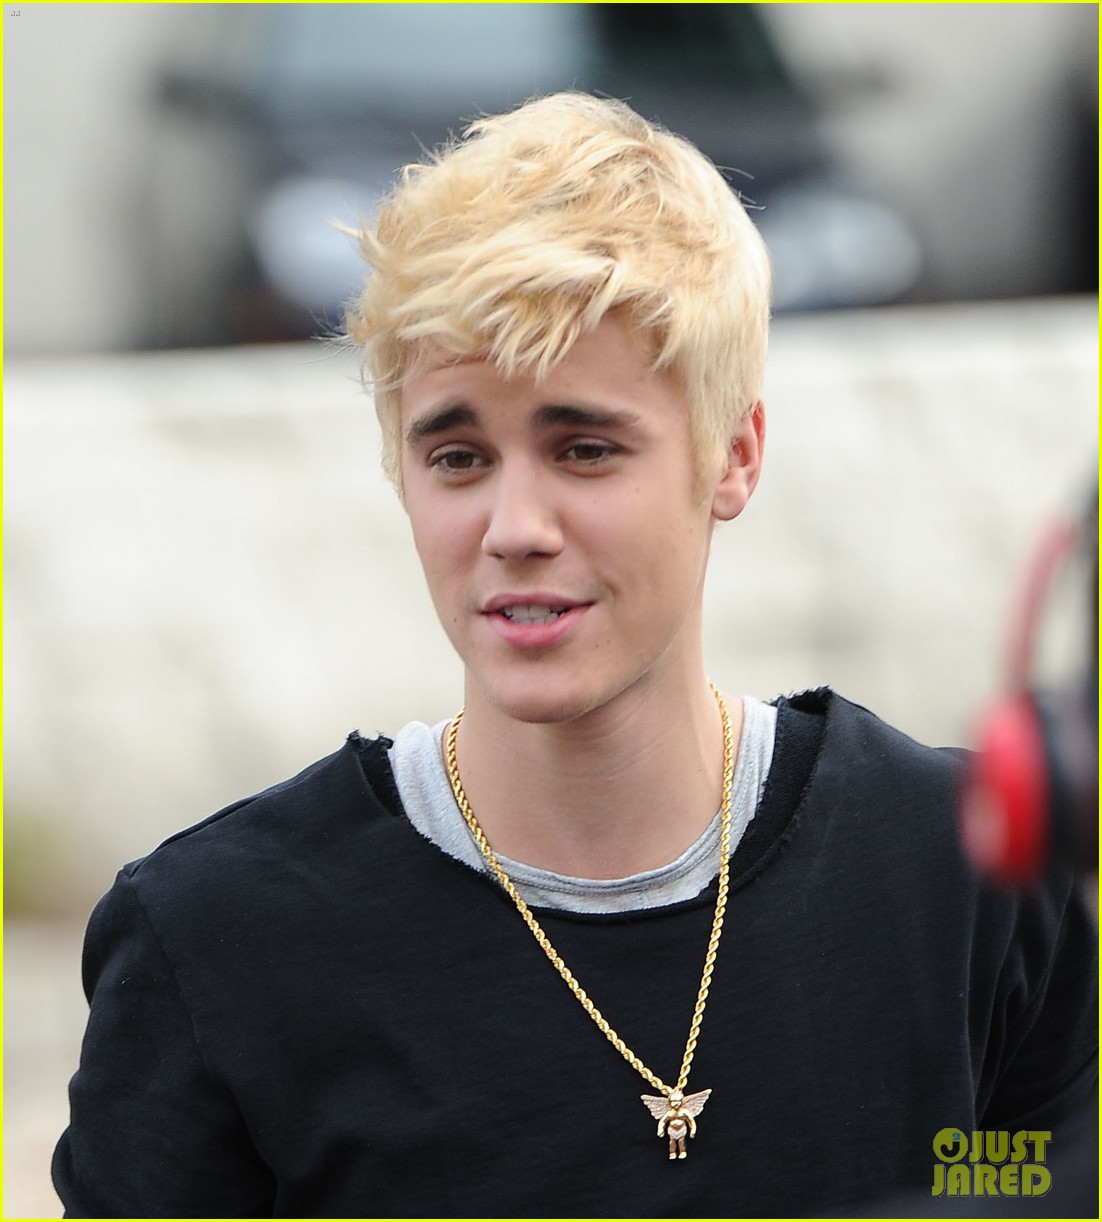 Justin Bieber Brings Back His Bleached Blonde 'Eminem' Hair: Photo 3257039  | Justin Bieber Pictures | Just Jared